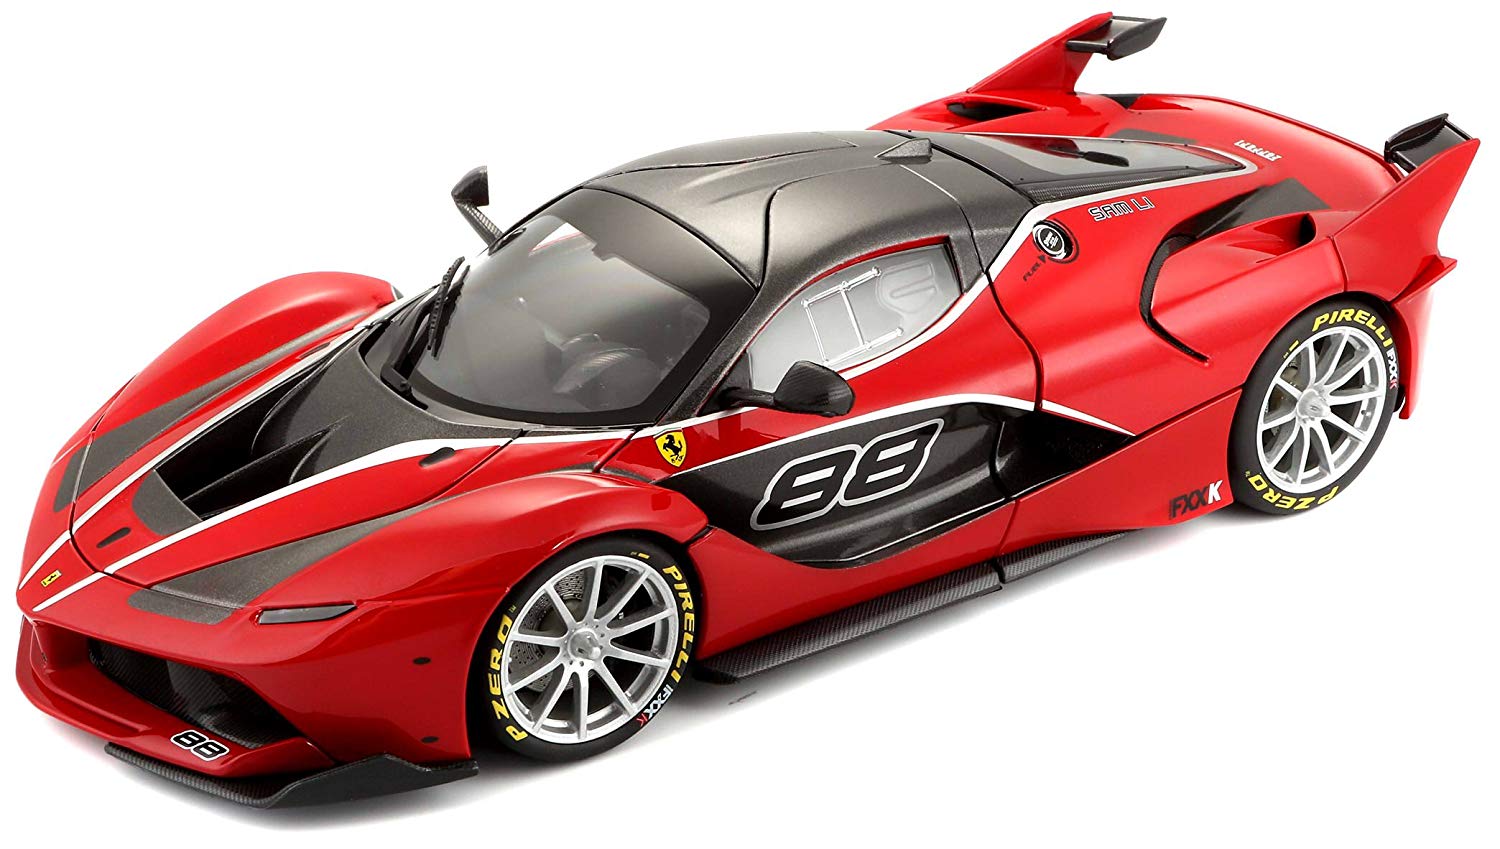 Bburago 1: 18 Scale Ferrari Fxx, Red 15616907R